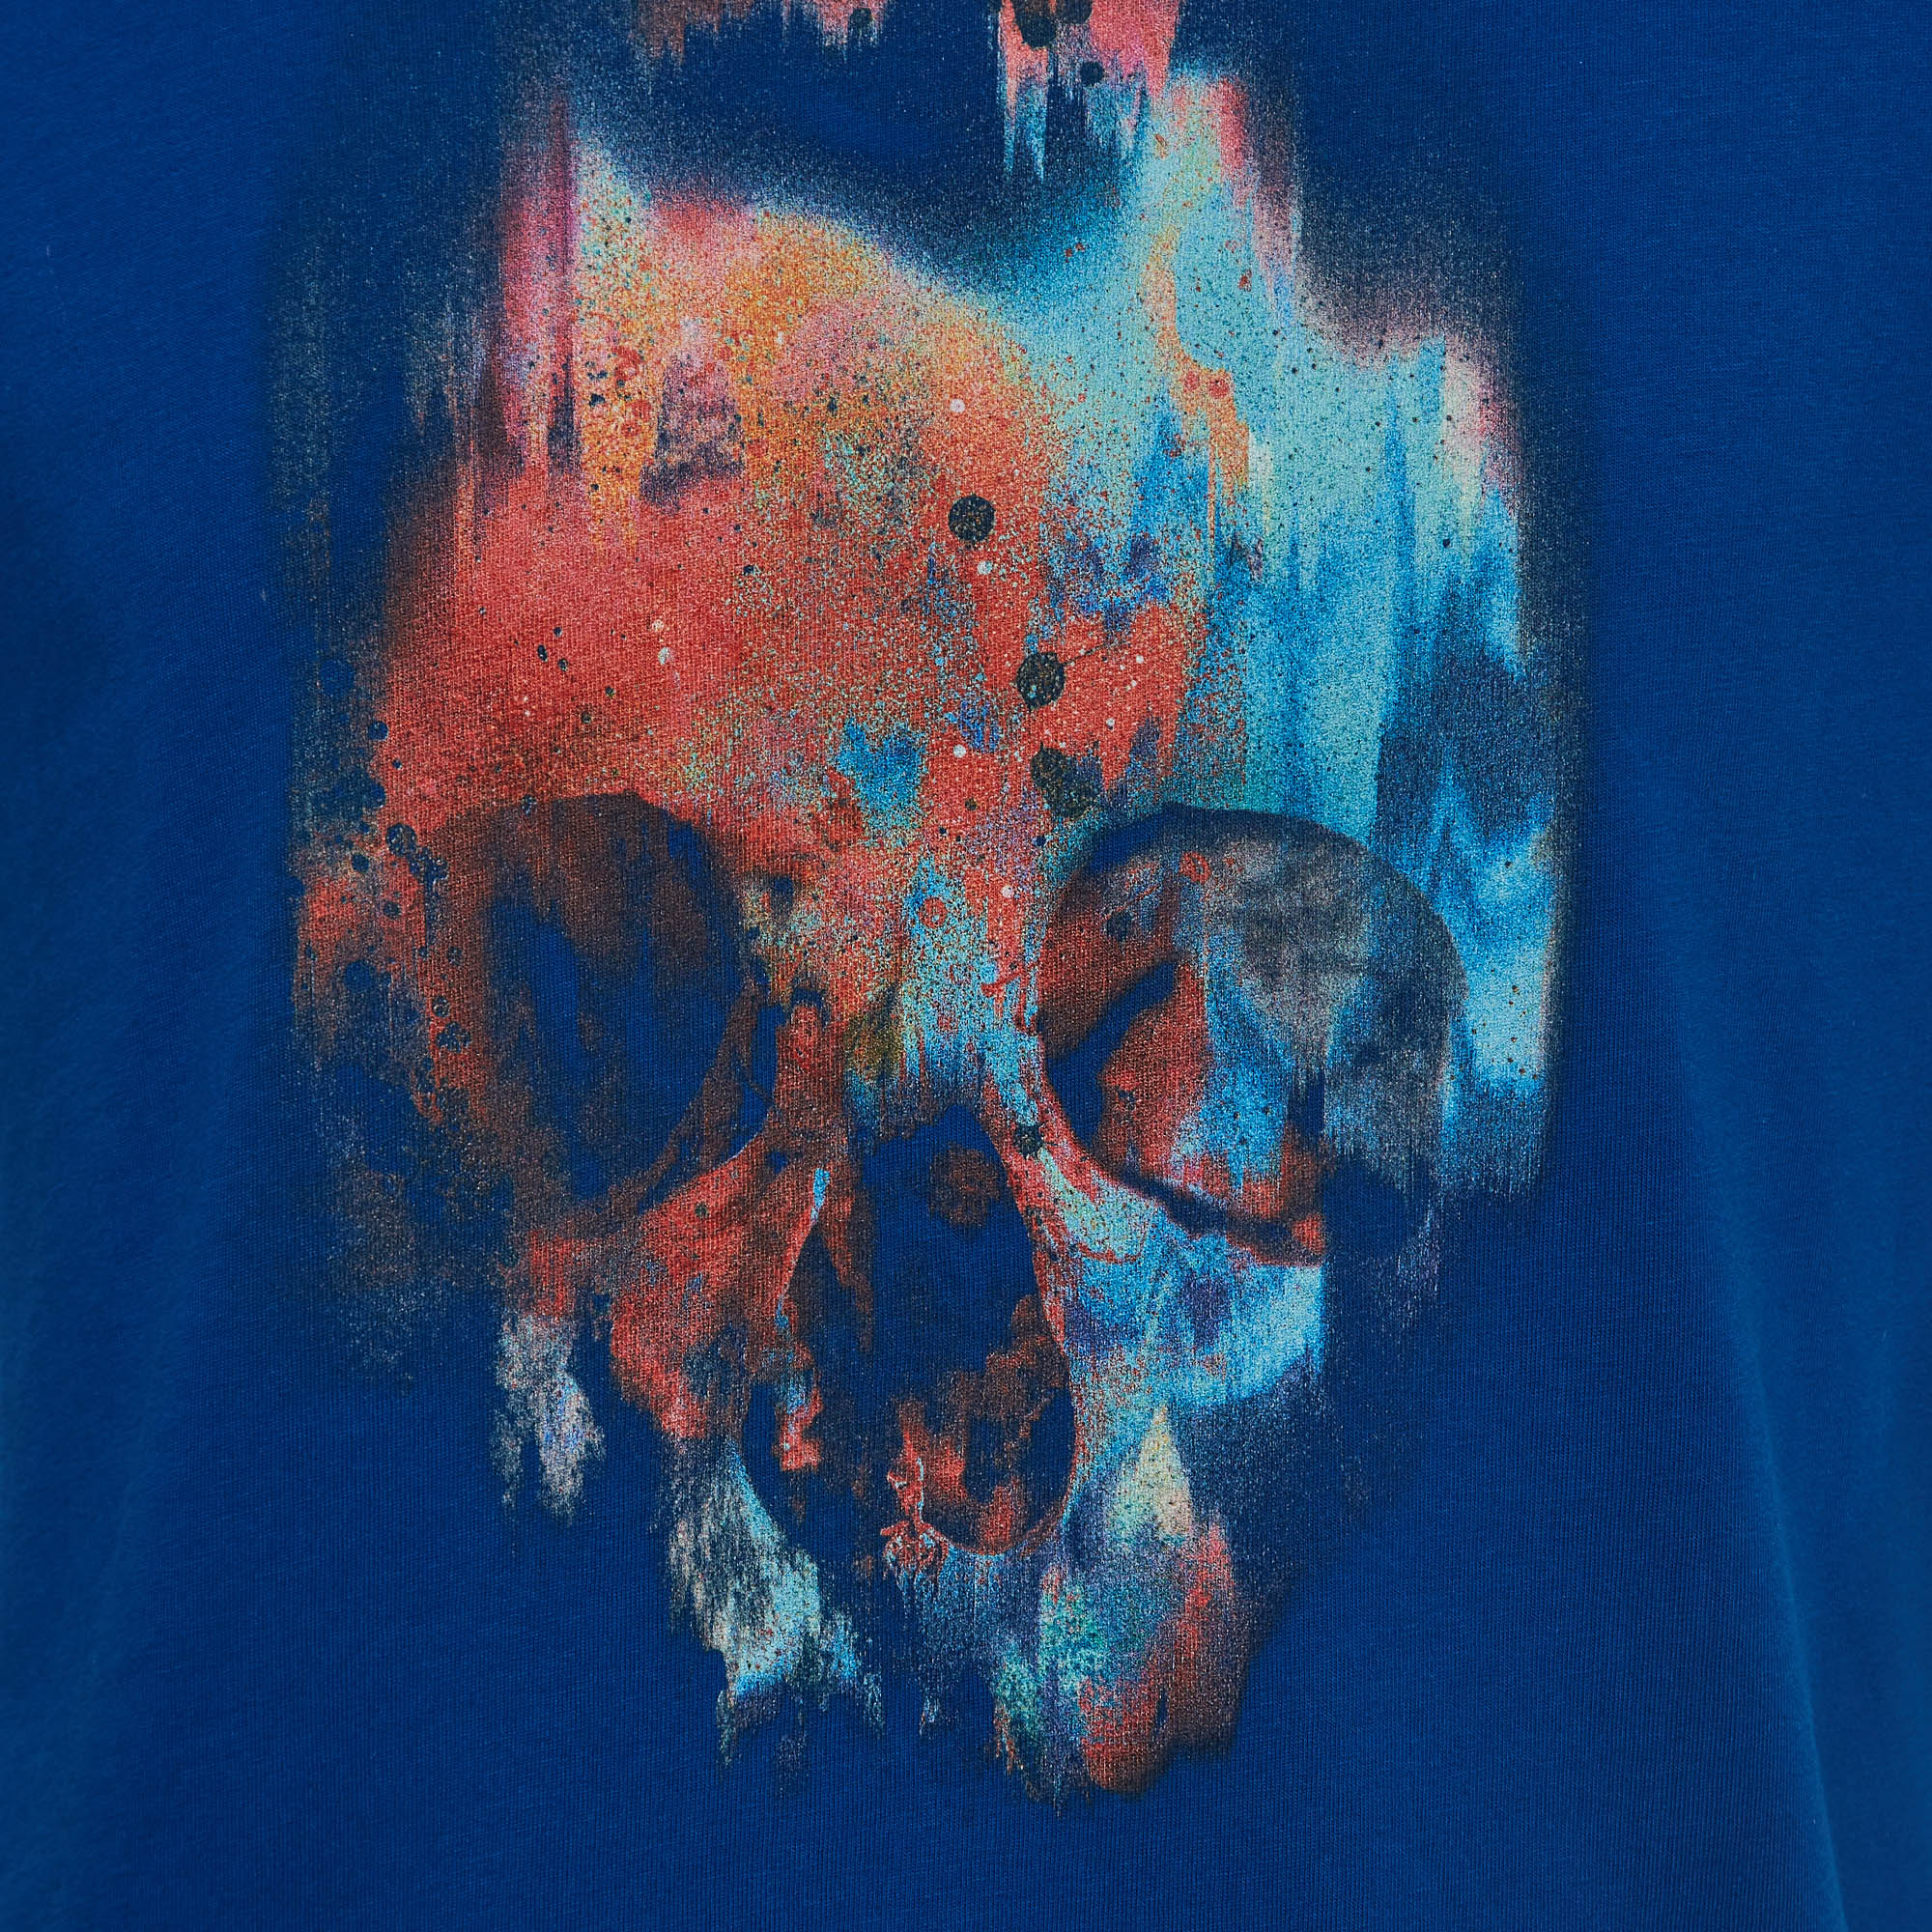 Alexander McQueen Blue Skull Print Cotton Crew Neck T-Shirt M